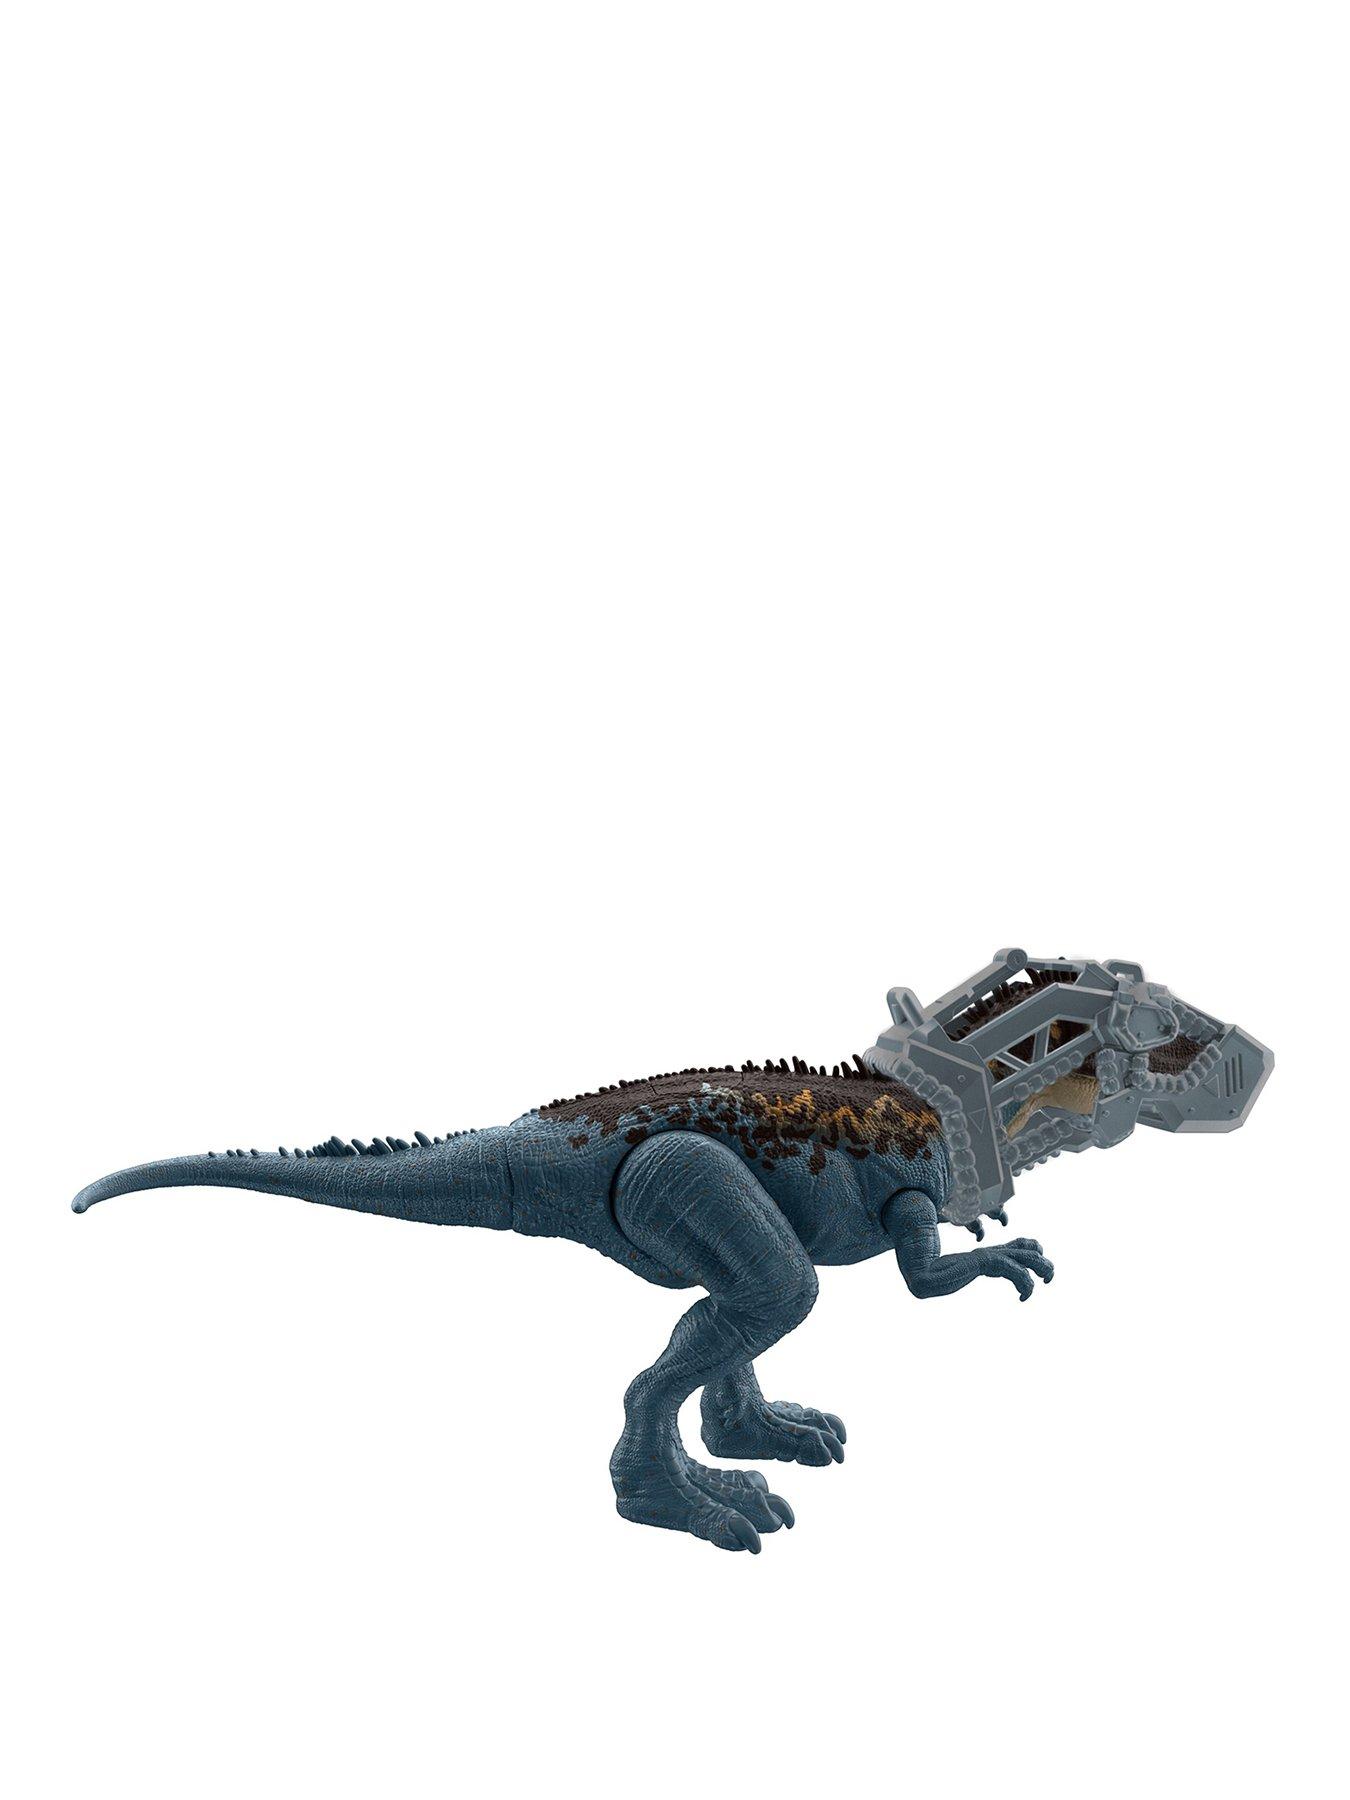 Details about   VELOCIRAPTOR Green/Brown Minifigure Dinosaur Jurassic World Park Blocks NIP